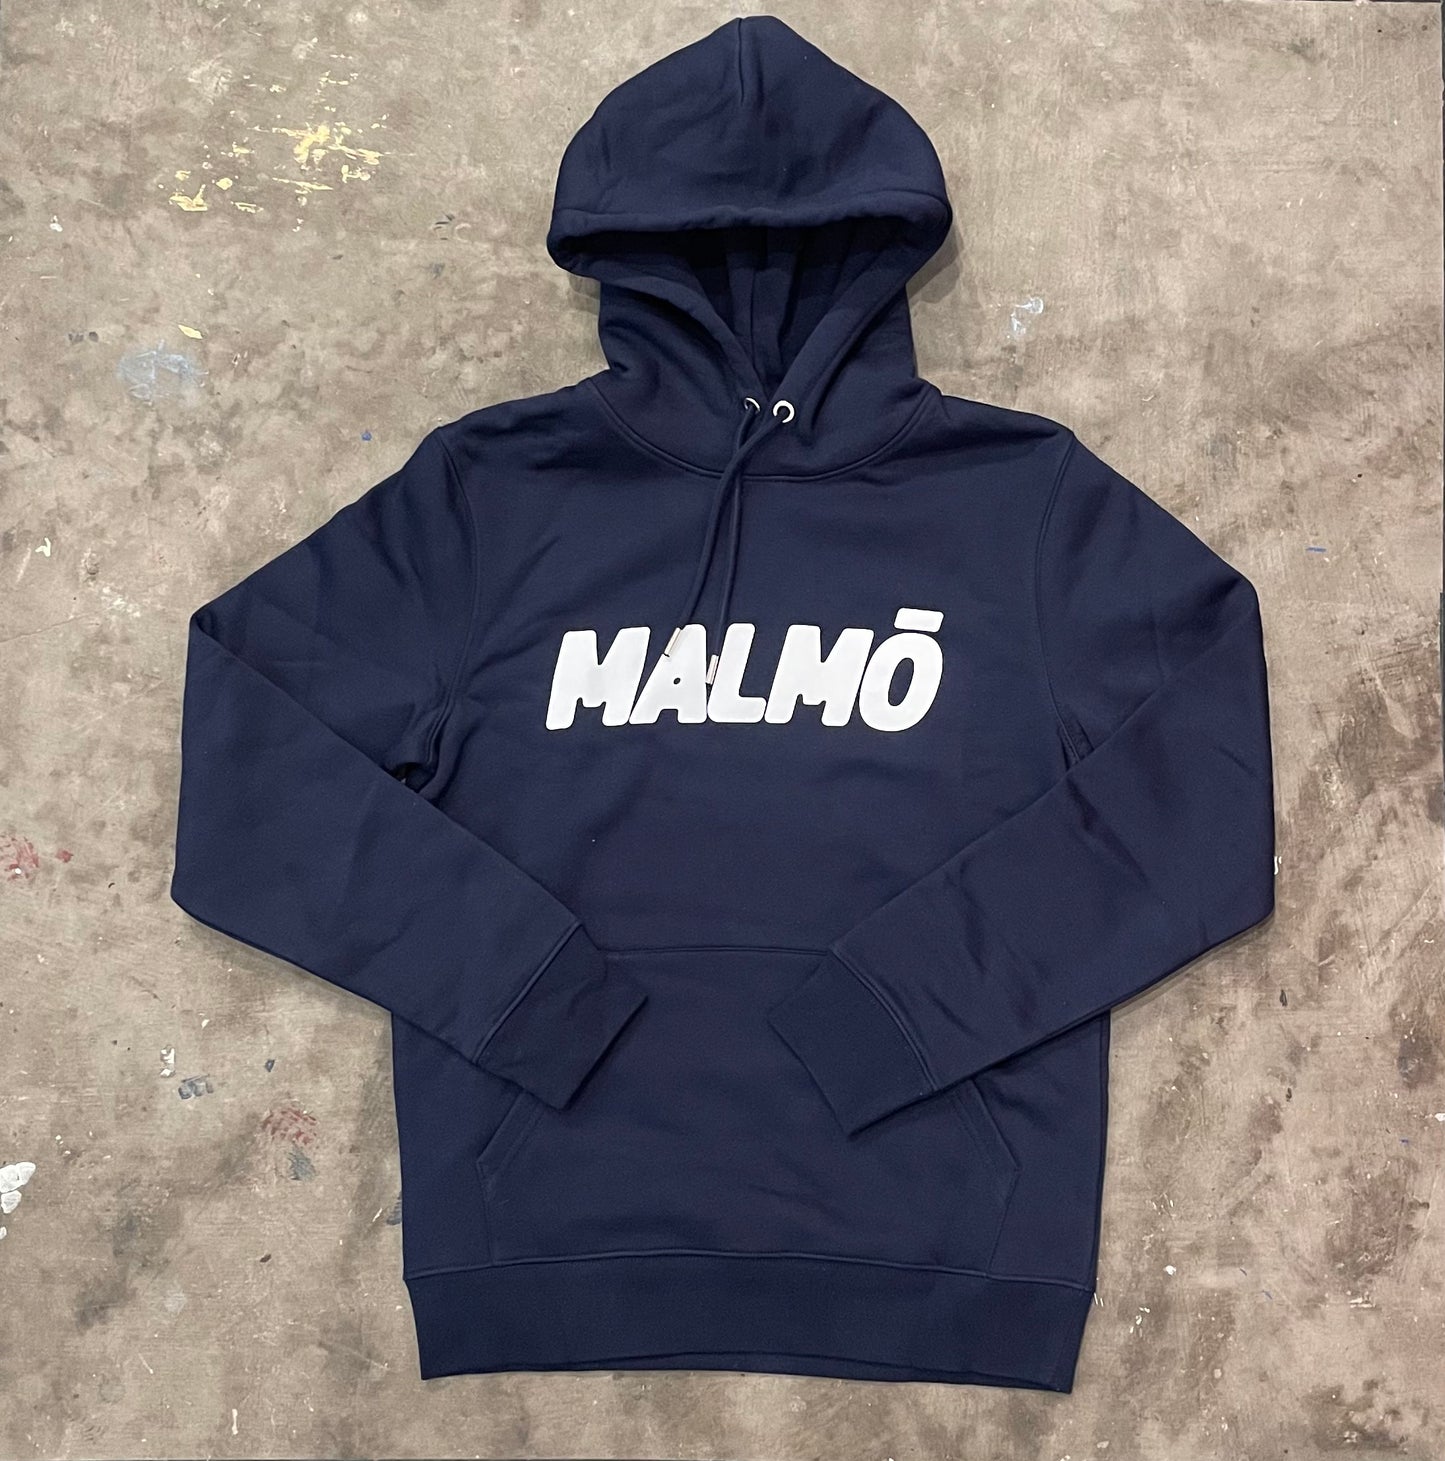 MALMÖ - Hoodie - Navy